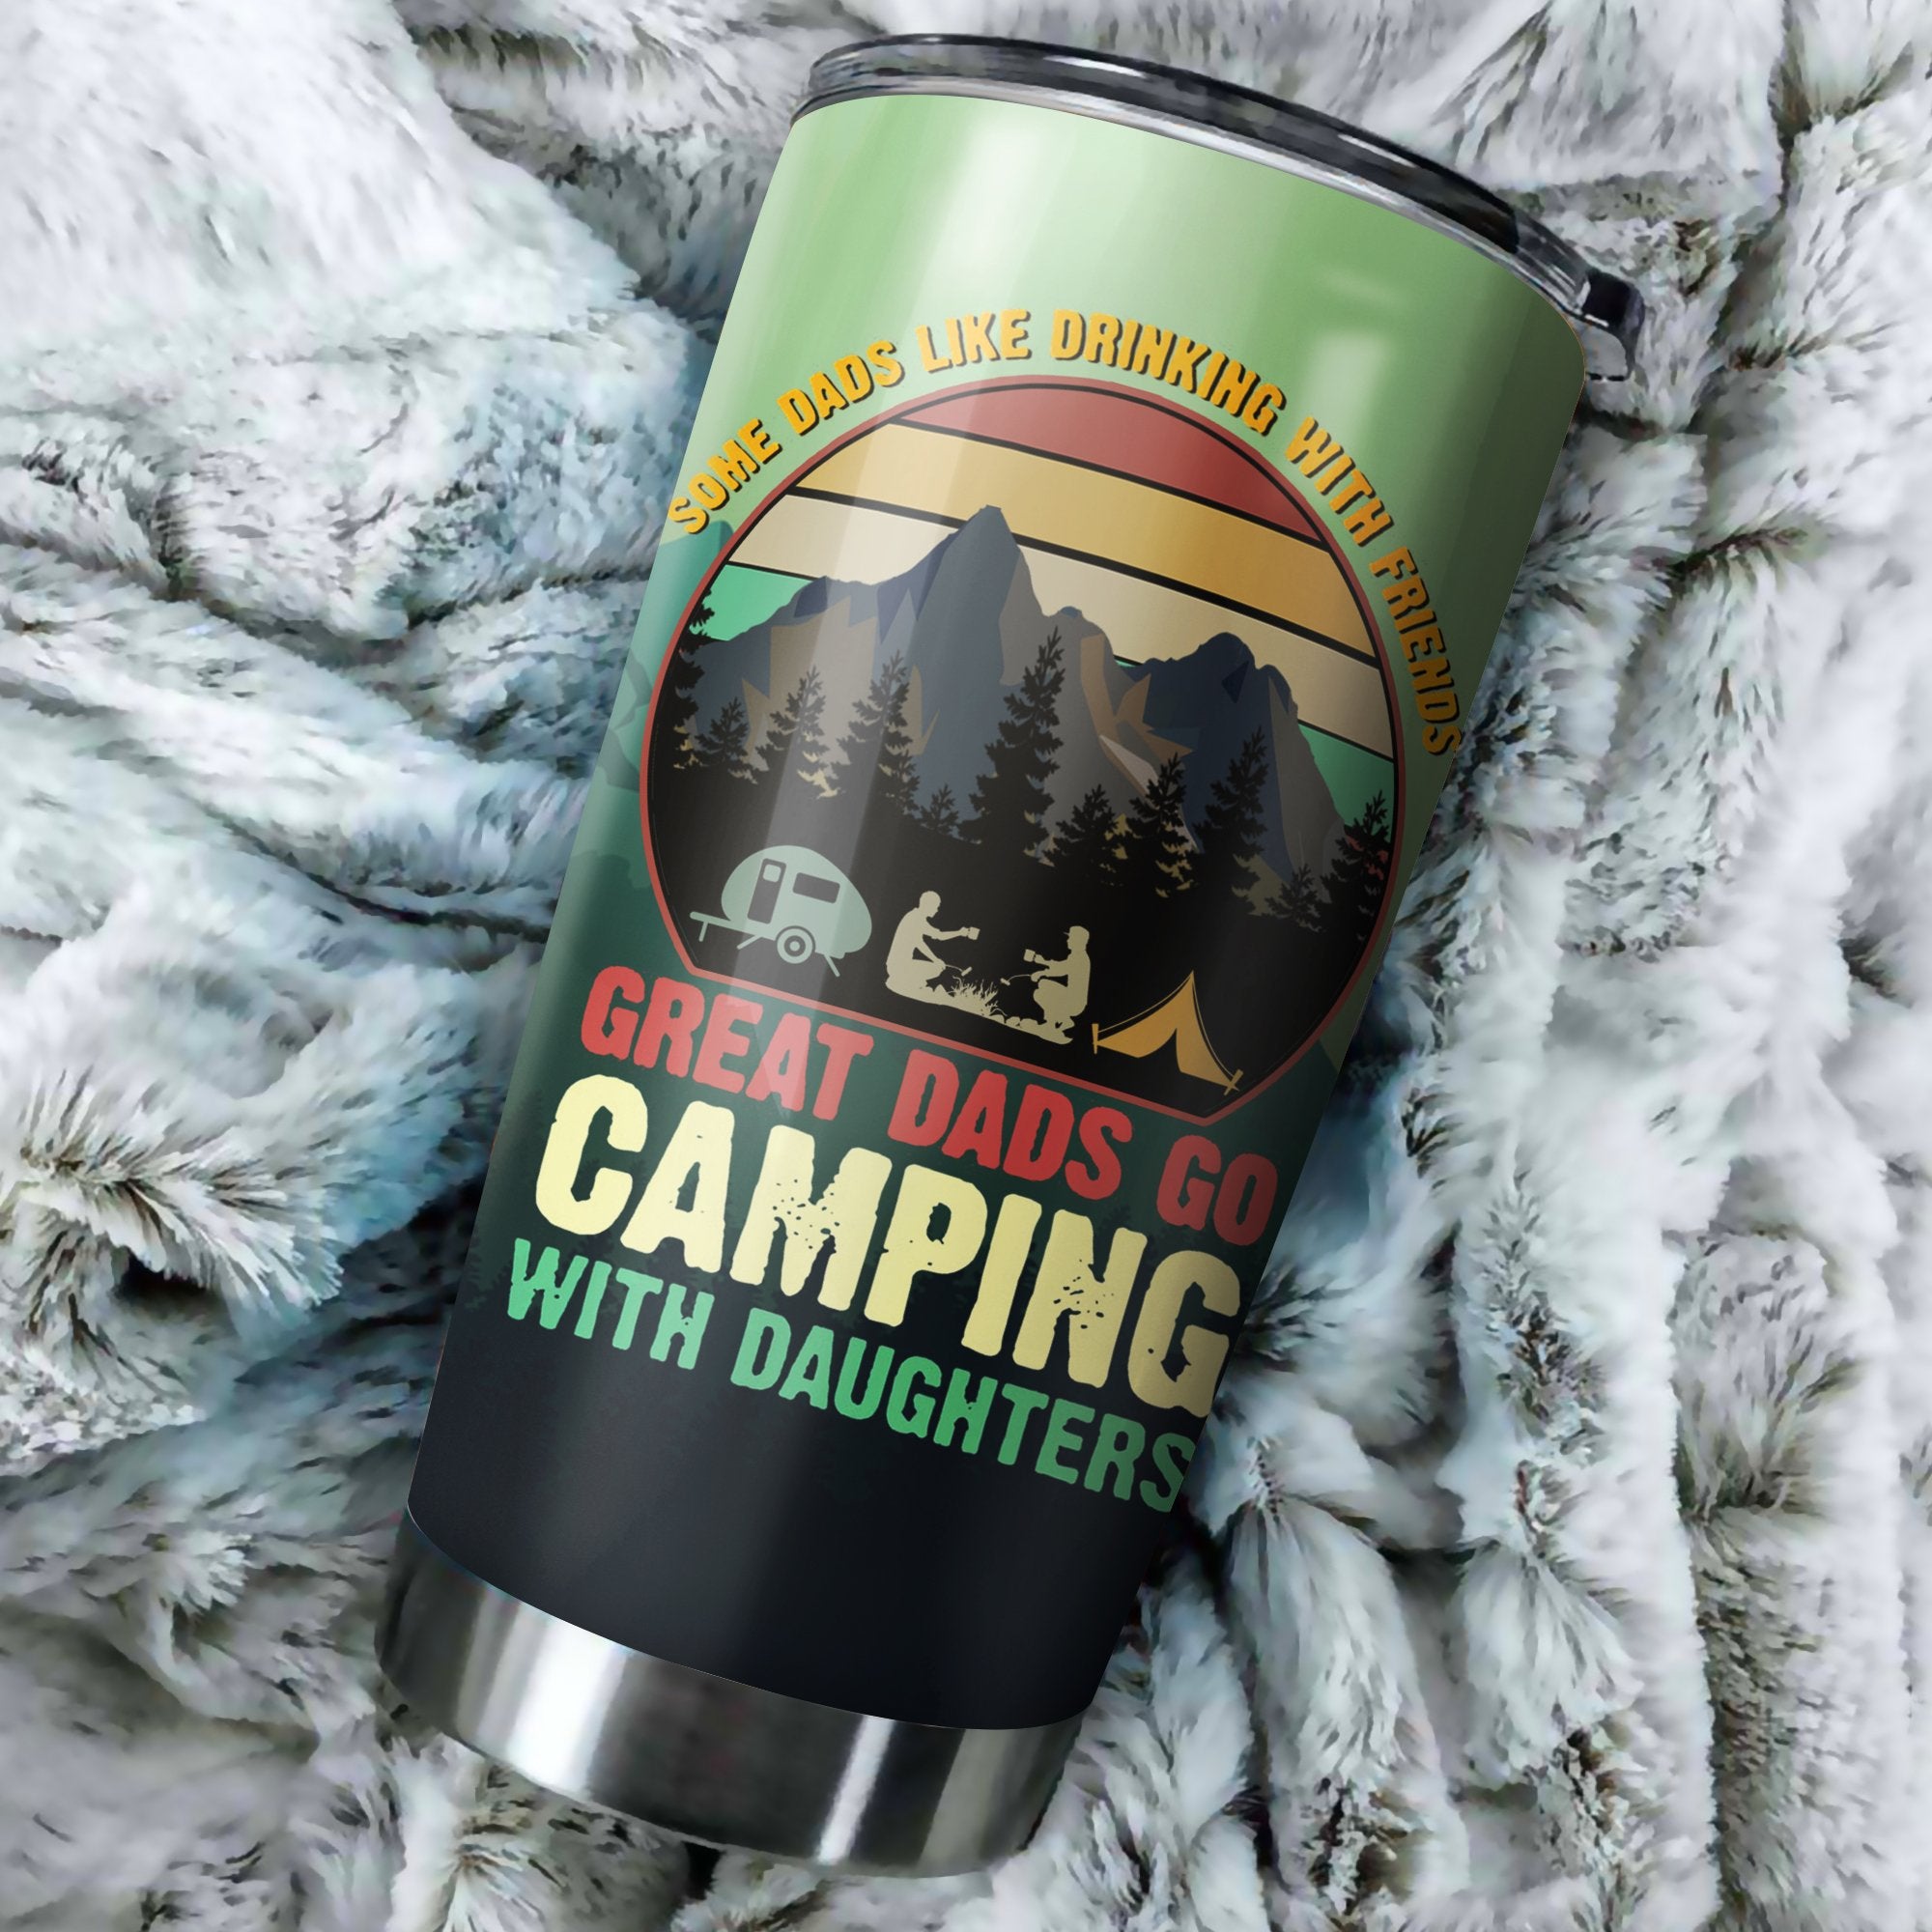 Great Dads Go Camping Camfire Tumbler 2023 Nearkii